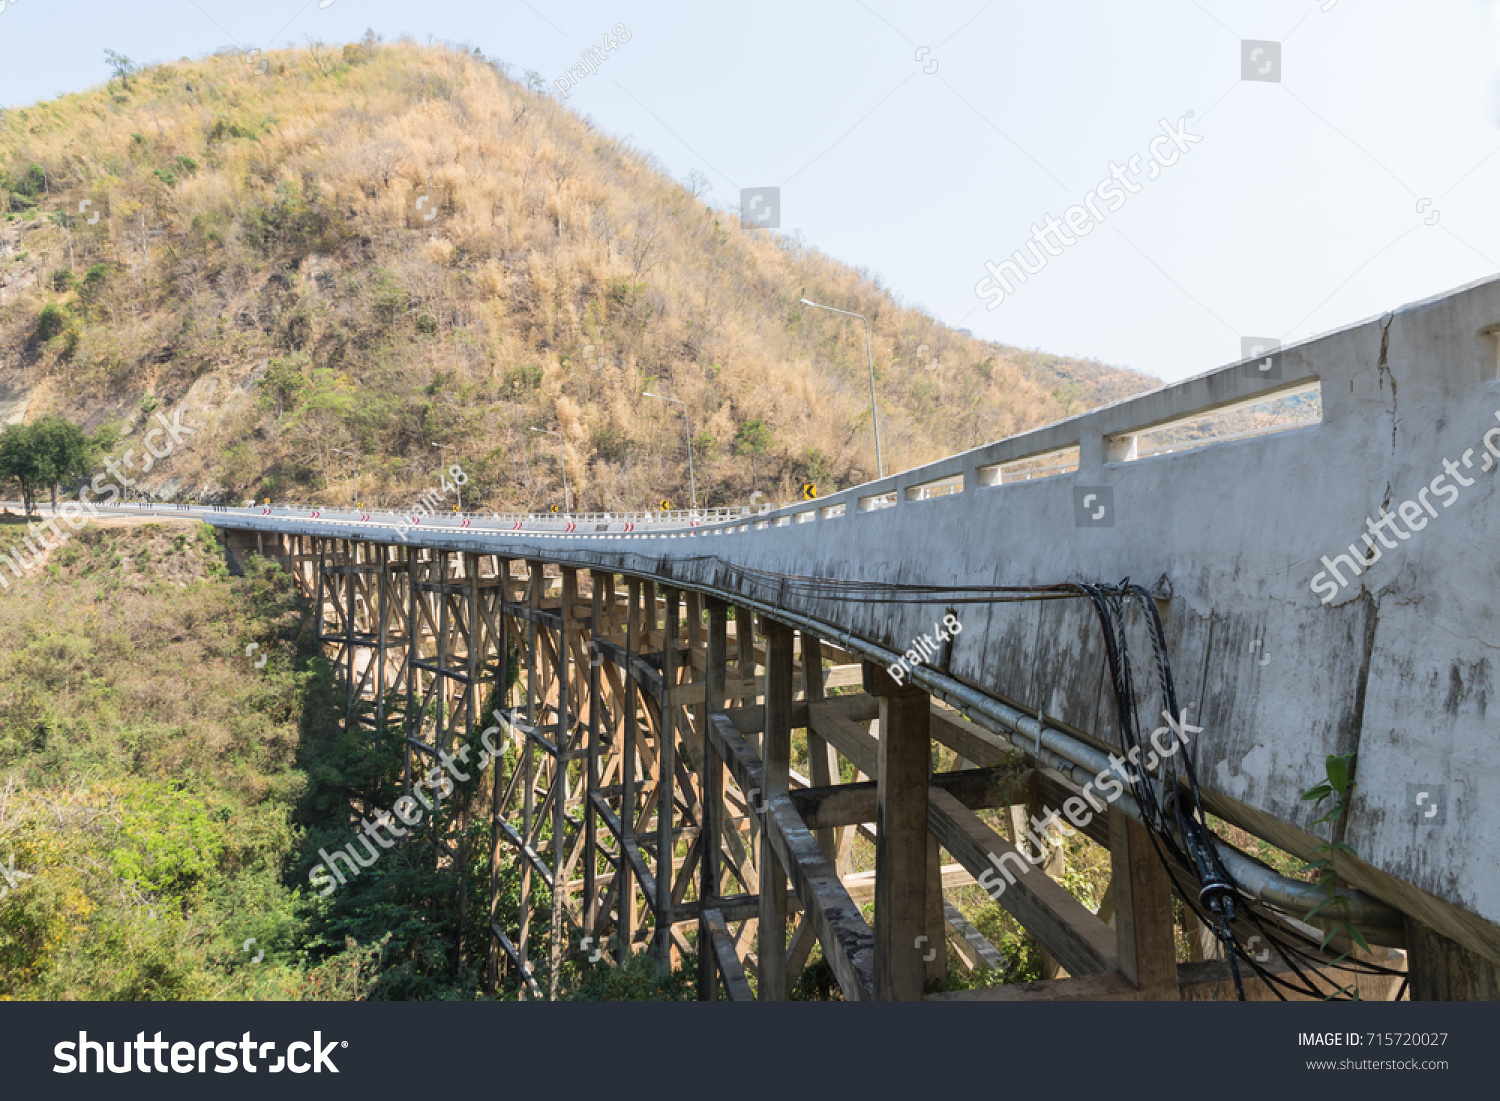 Concrete bridge across the deep gorge in the valley, Thailand #715720027